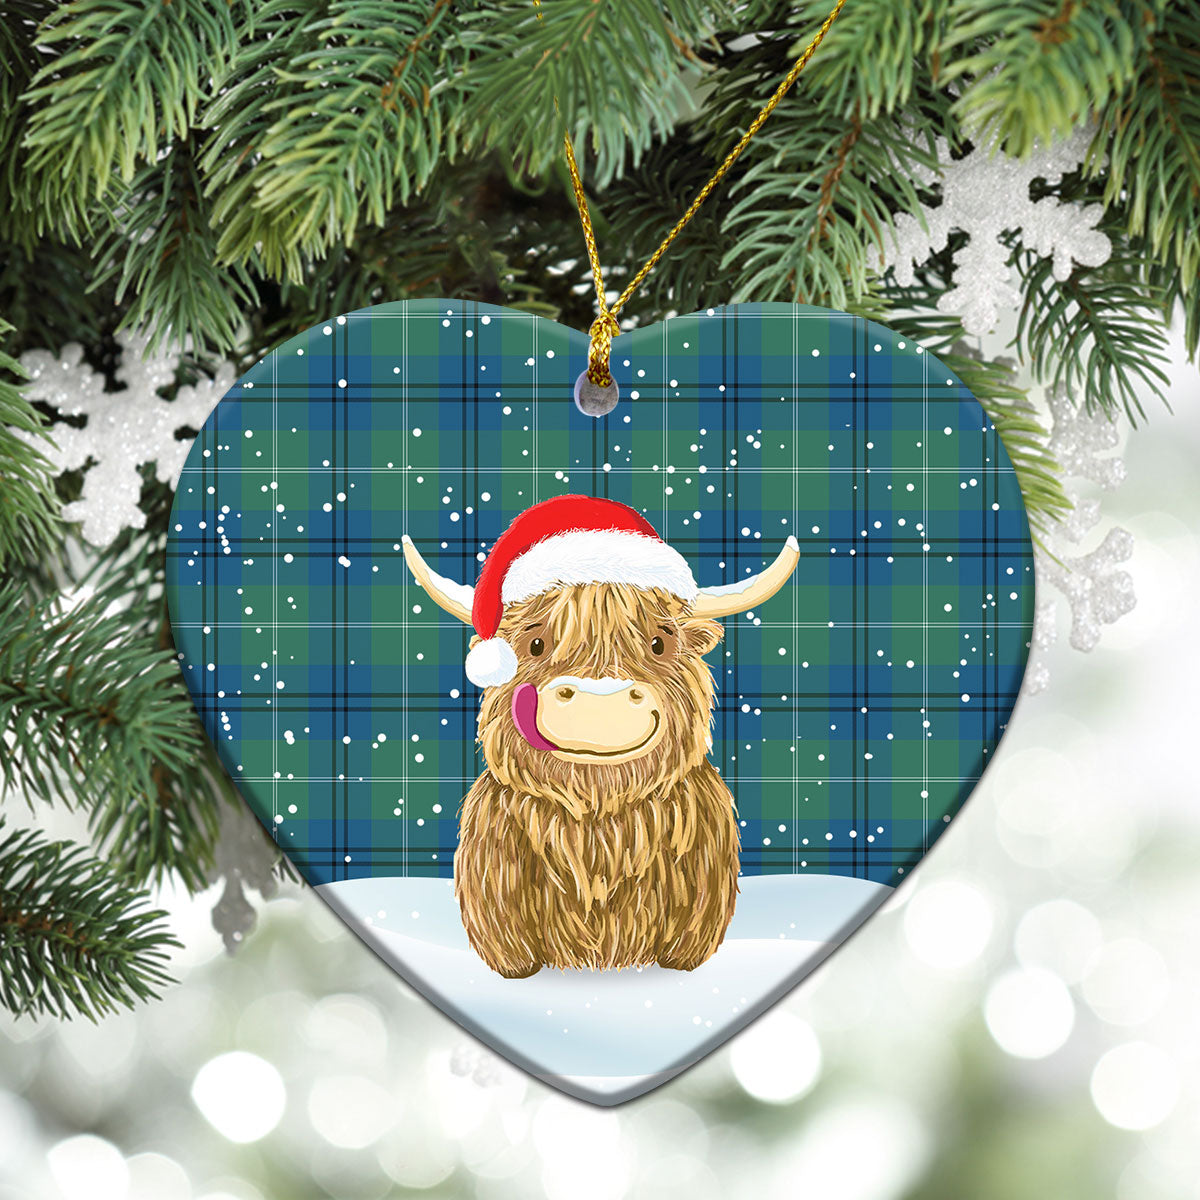 Oliphant Ancient Tartan Christmas Ceramic Ornament - Highland Cows Style